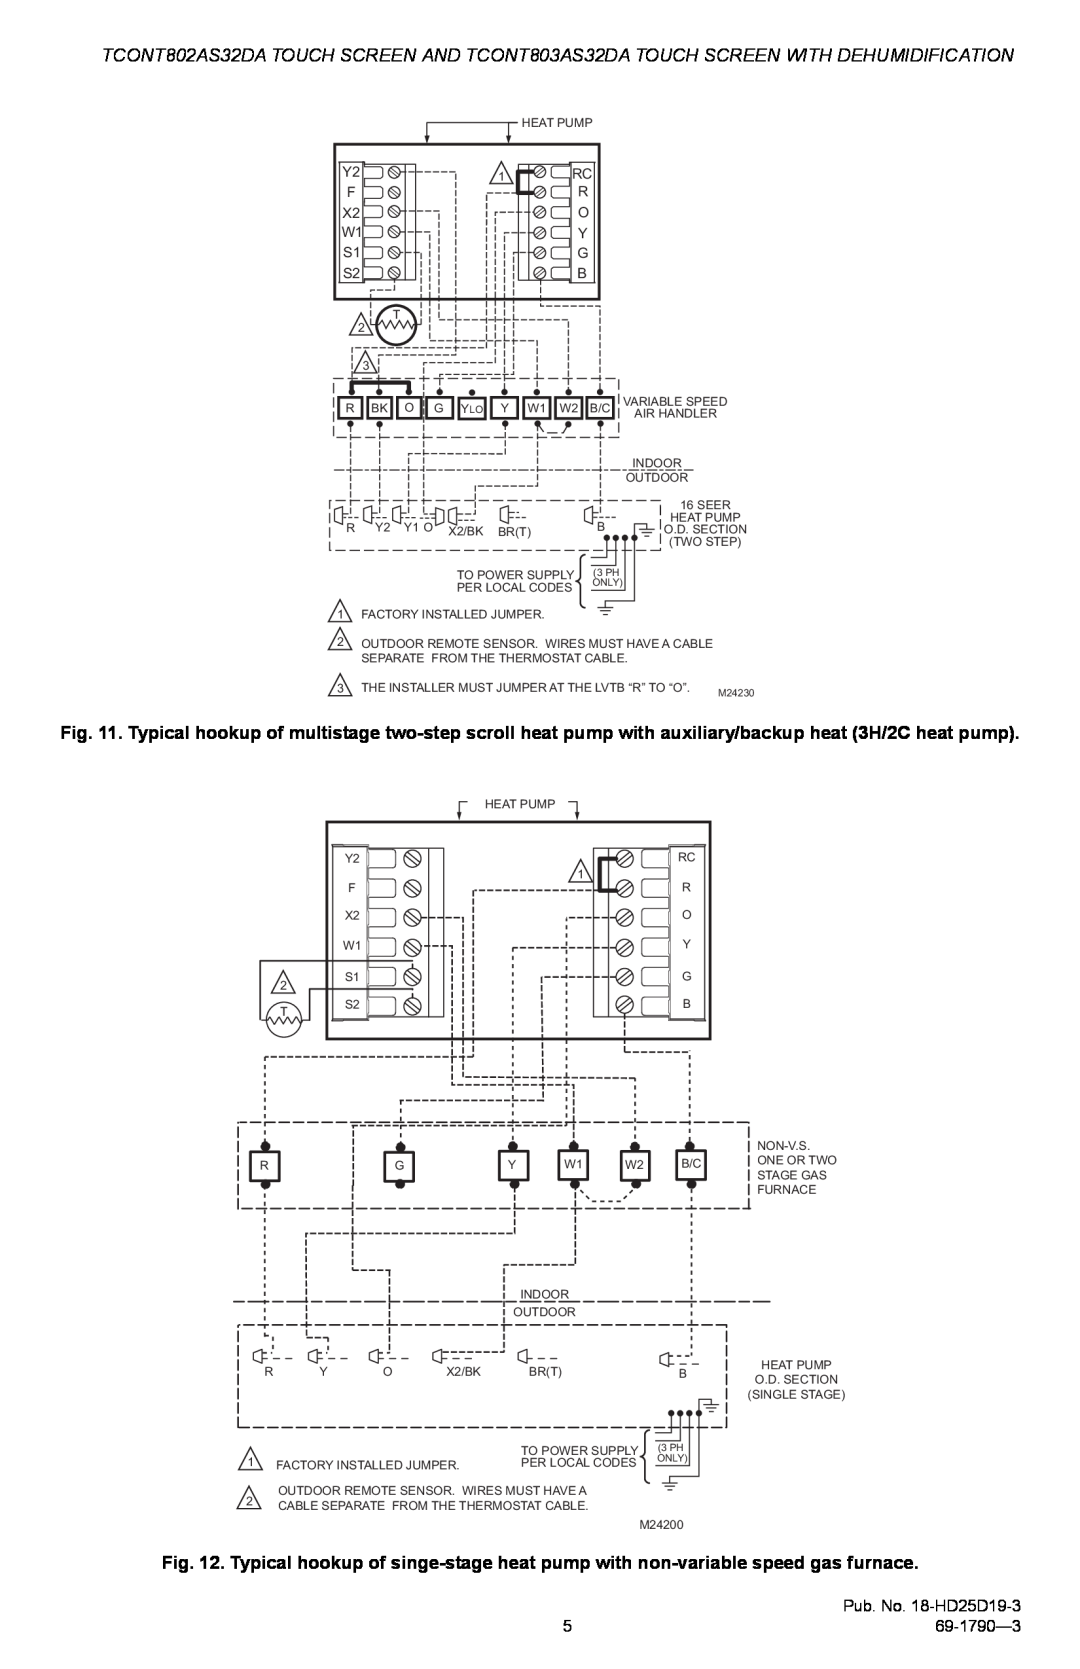 Trane TCONT802AS32DA, TCONT803AS32DA installation instructions Pub. No. 18-HD25D19-3, 69-1790-3 